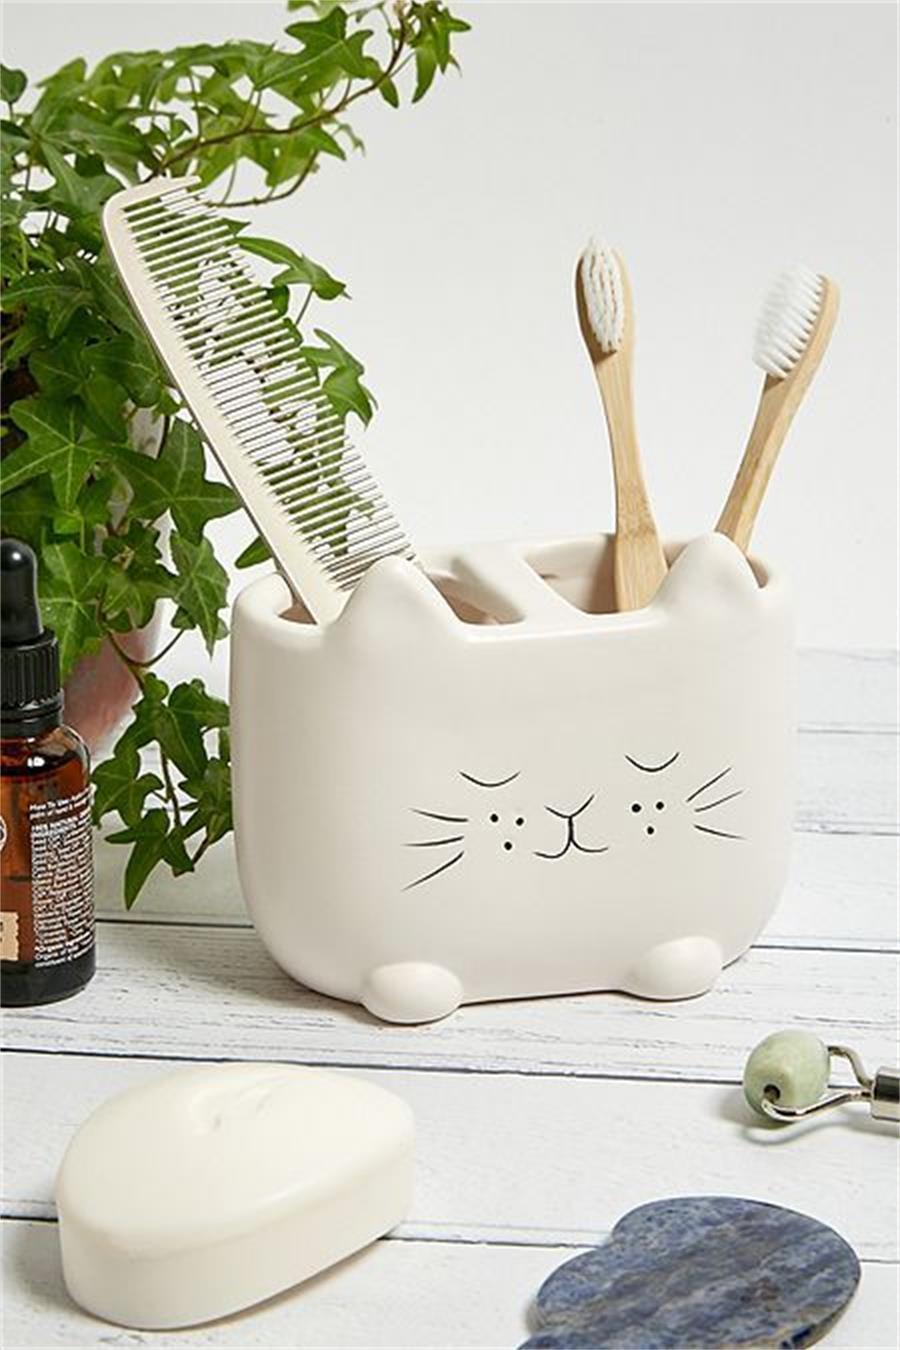 Cute Animal Cat Ceramic Soap Lotion Bottle Toothbrush Holder Bathroom Set